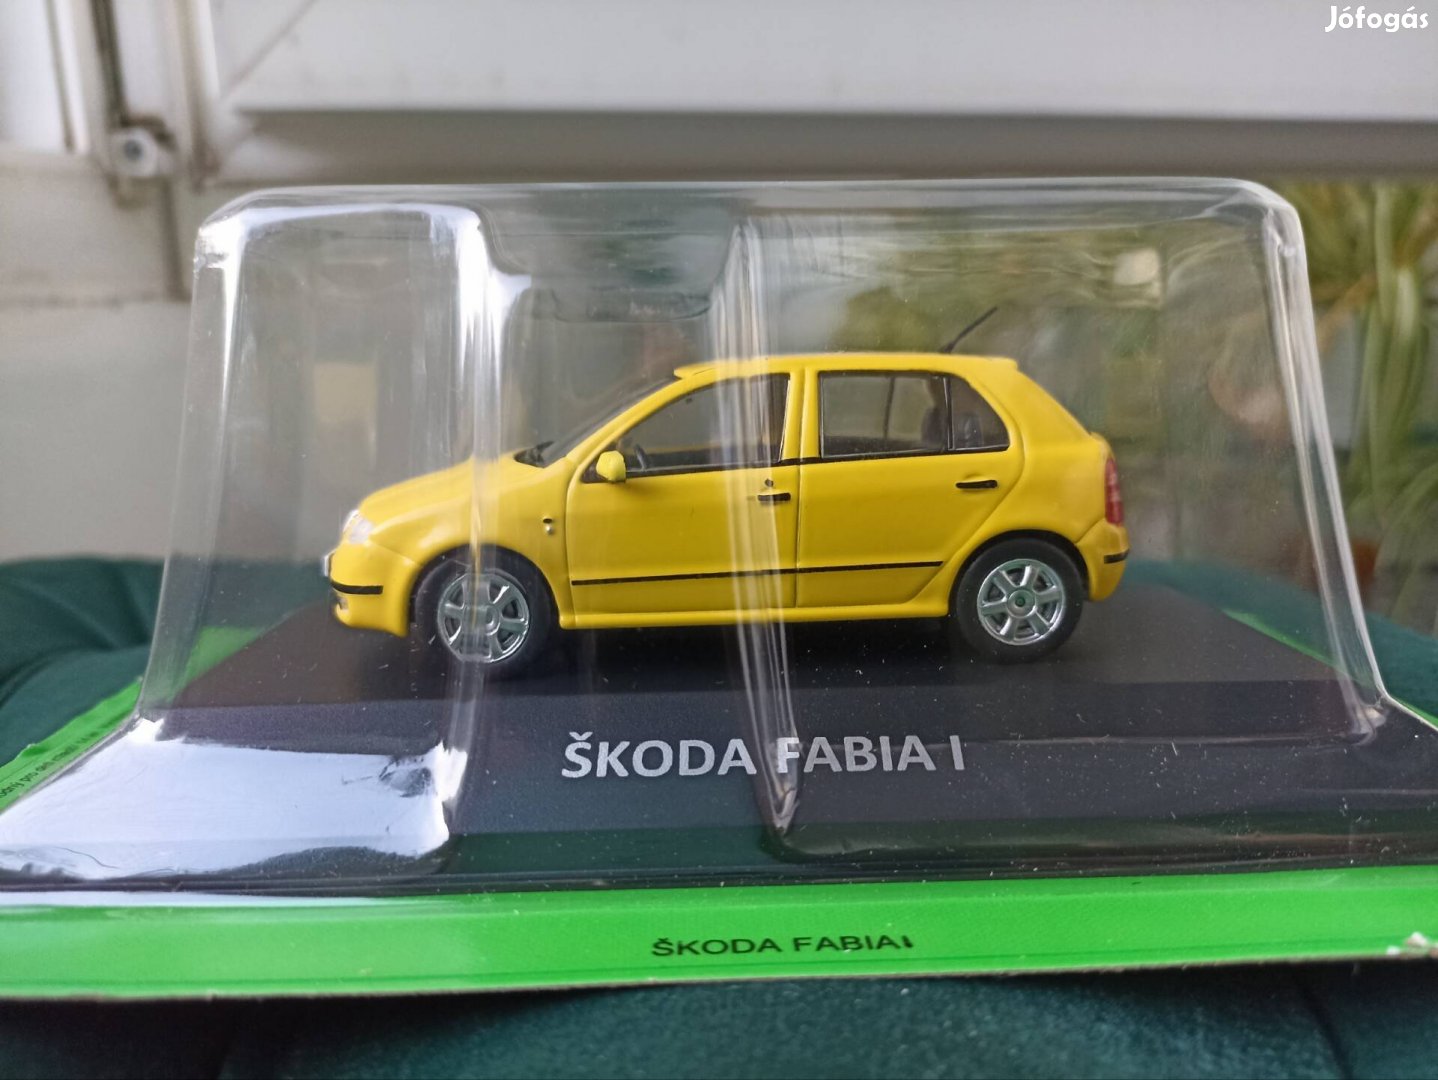 Skoda Fabia I 1:43 modell Kaleidoskop